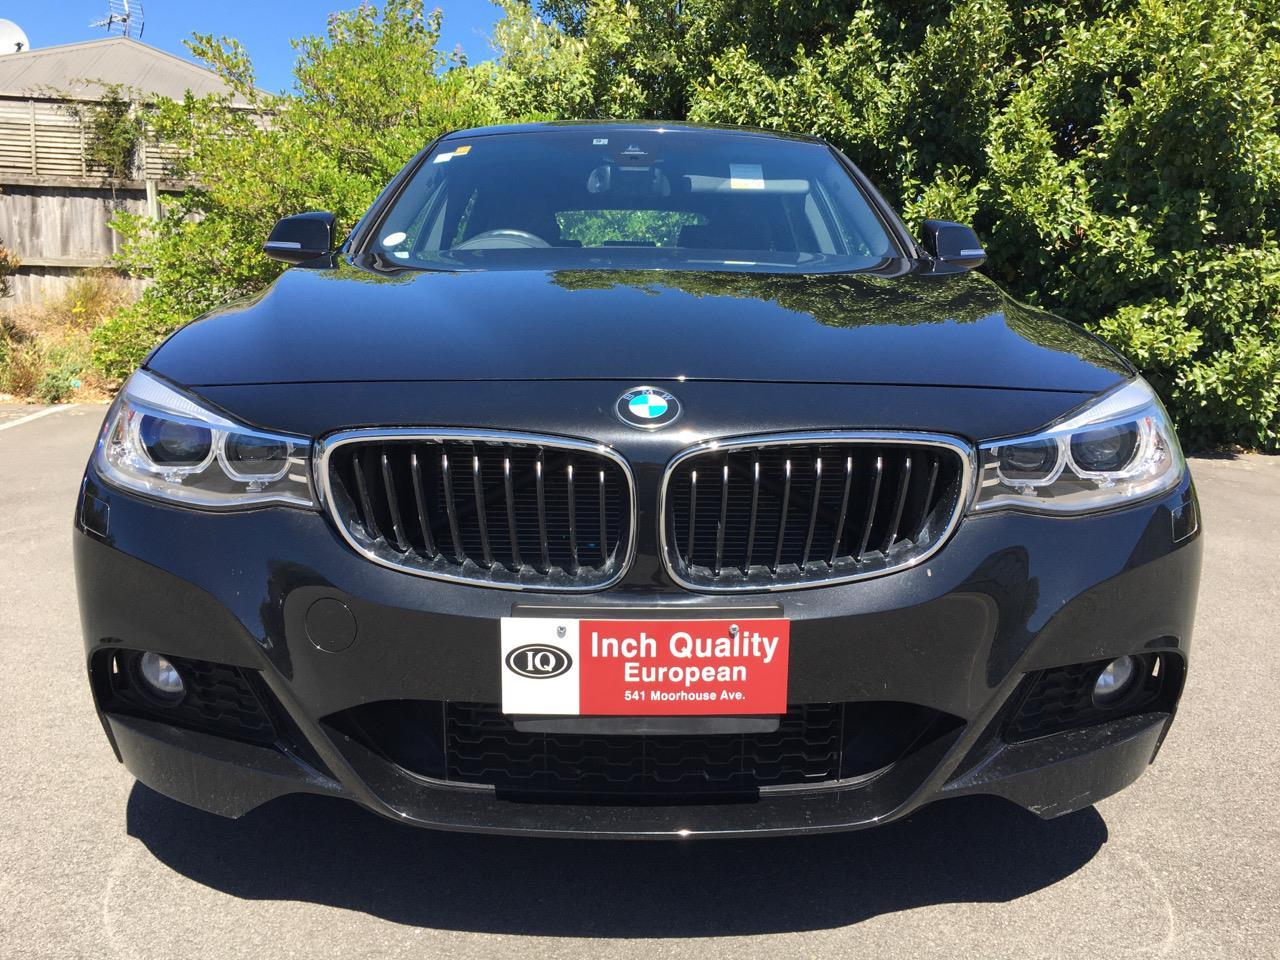 image-1, 2014 BMW 320i M Sport Grand Turismo at Christchurch